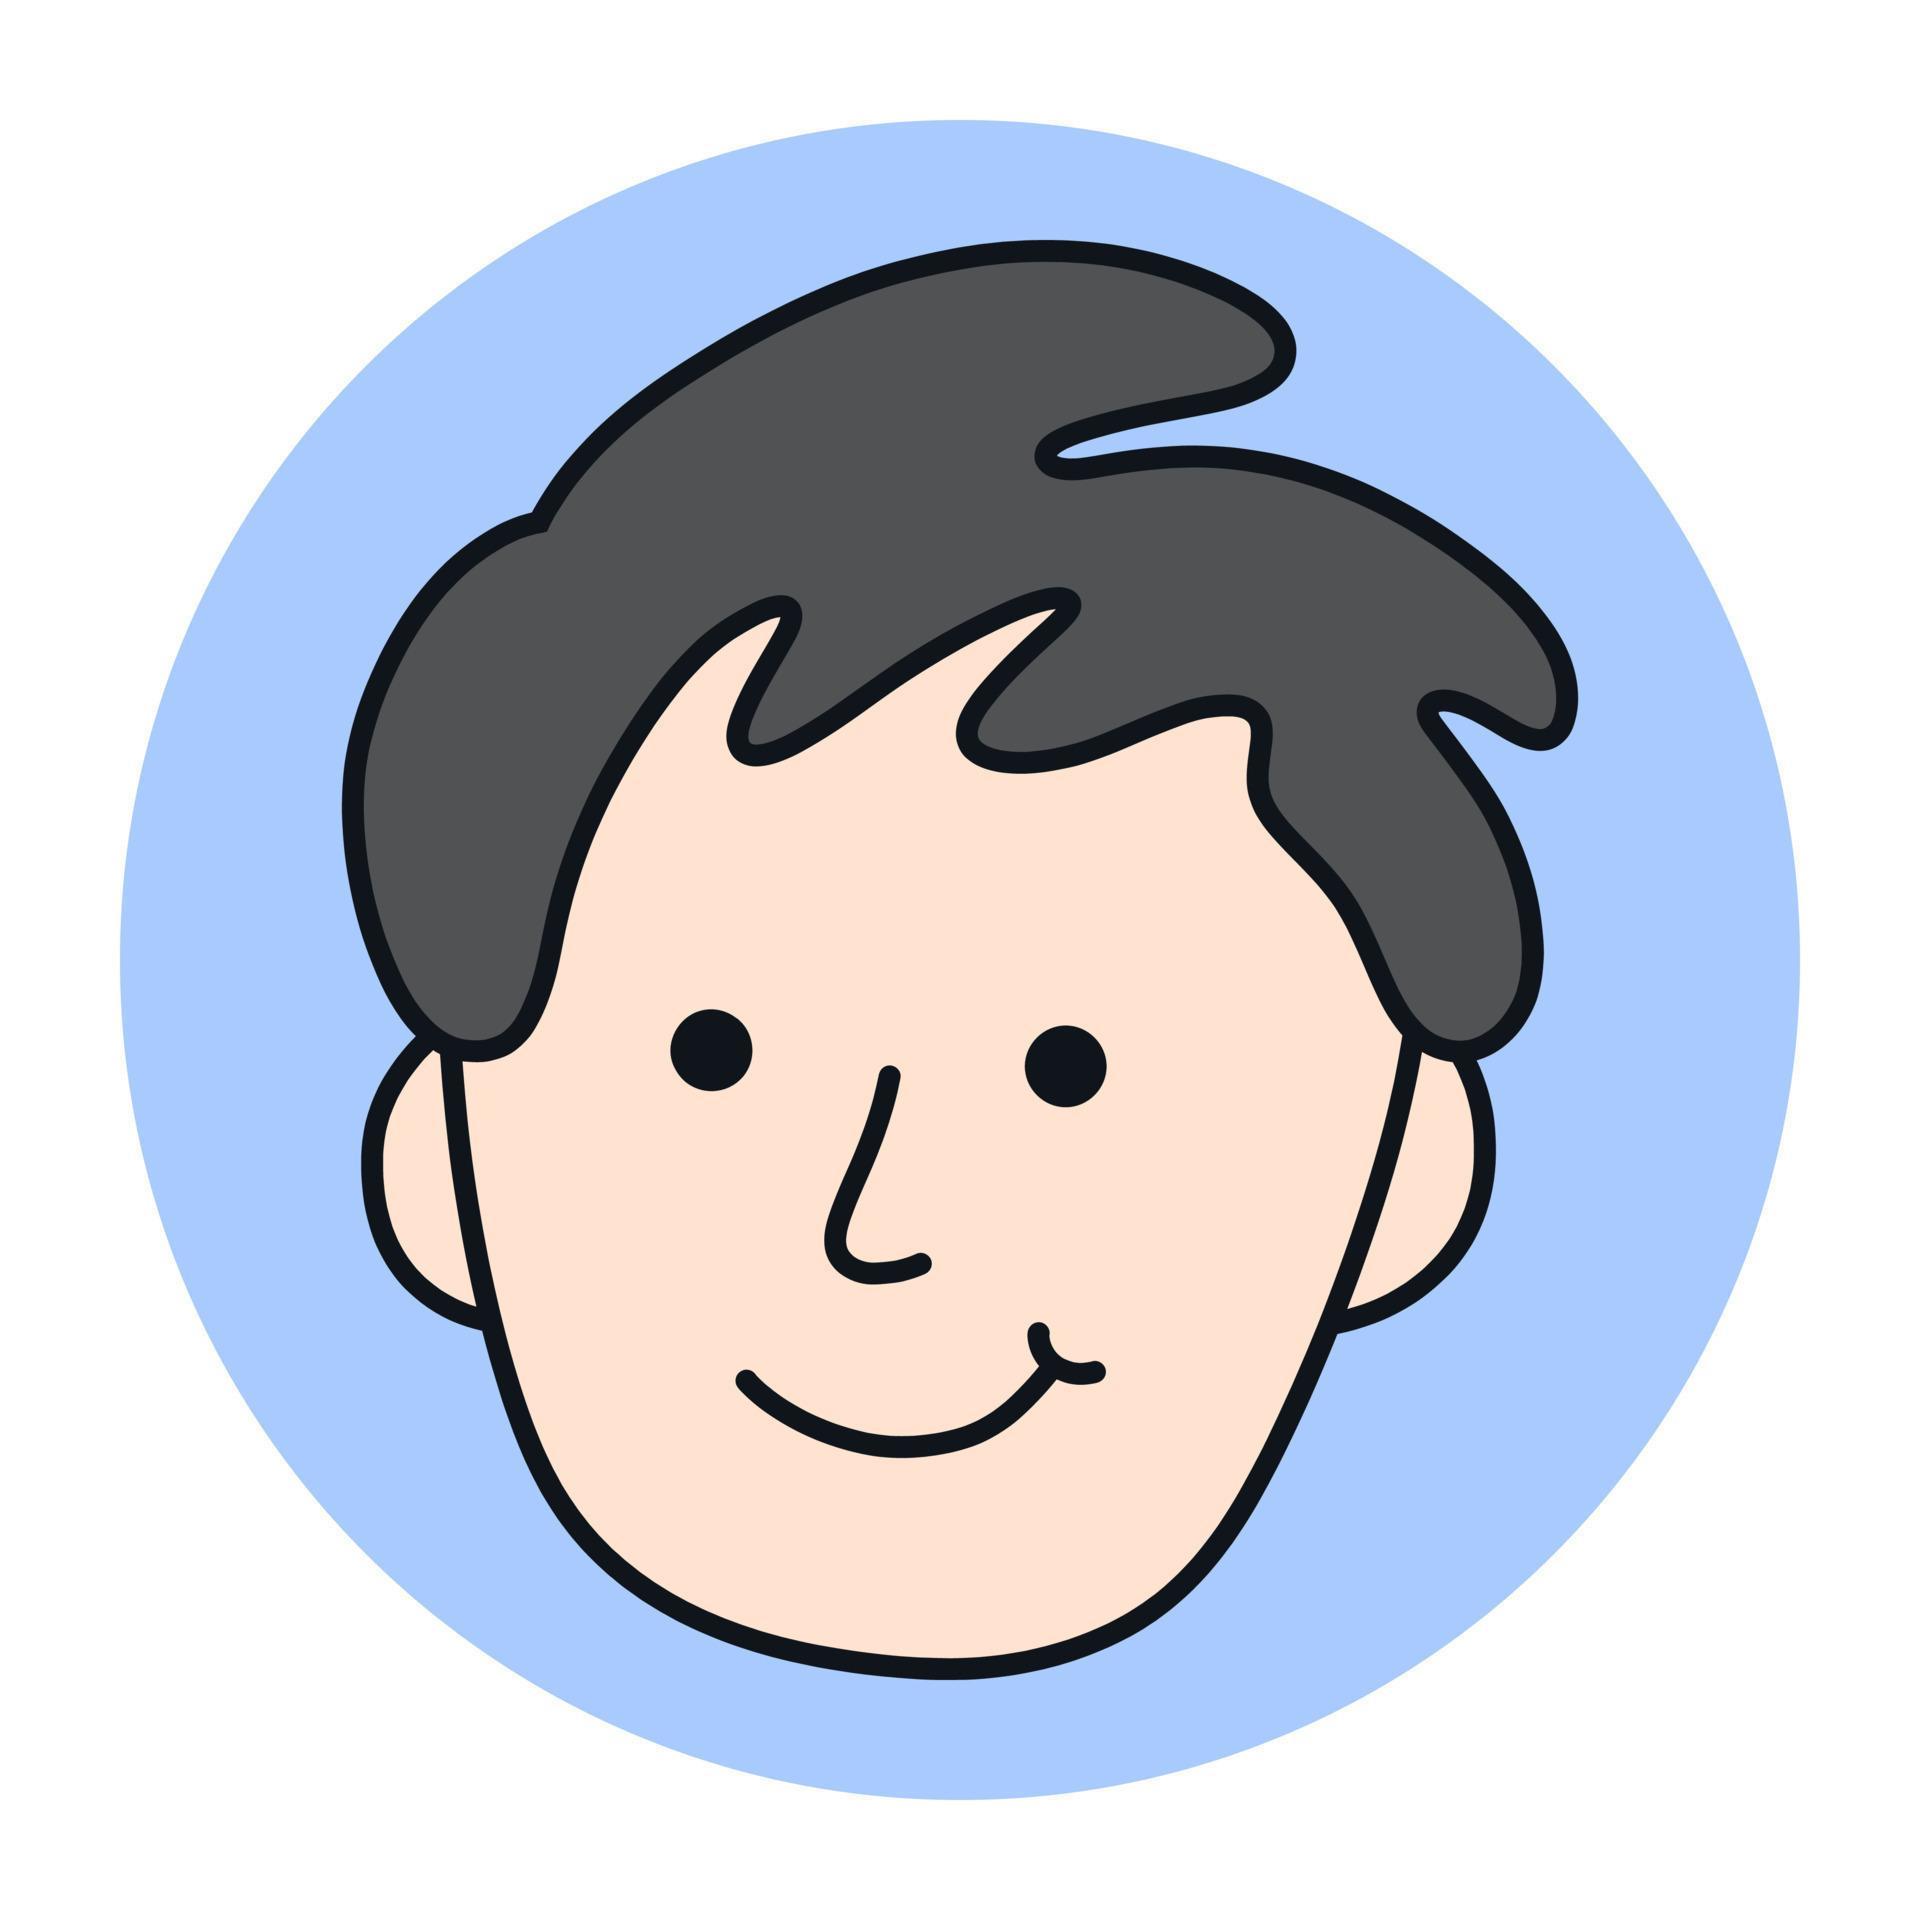 Male Profile Mascot Vector Illustration Man Avatar Icon Cartoon Face